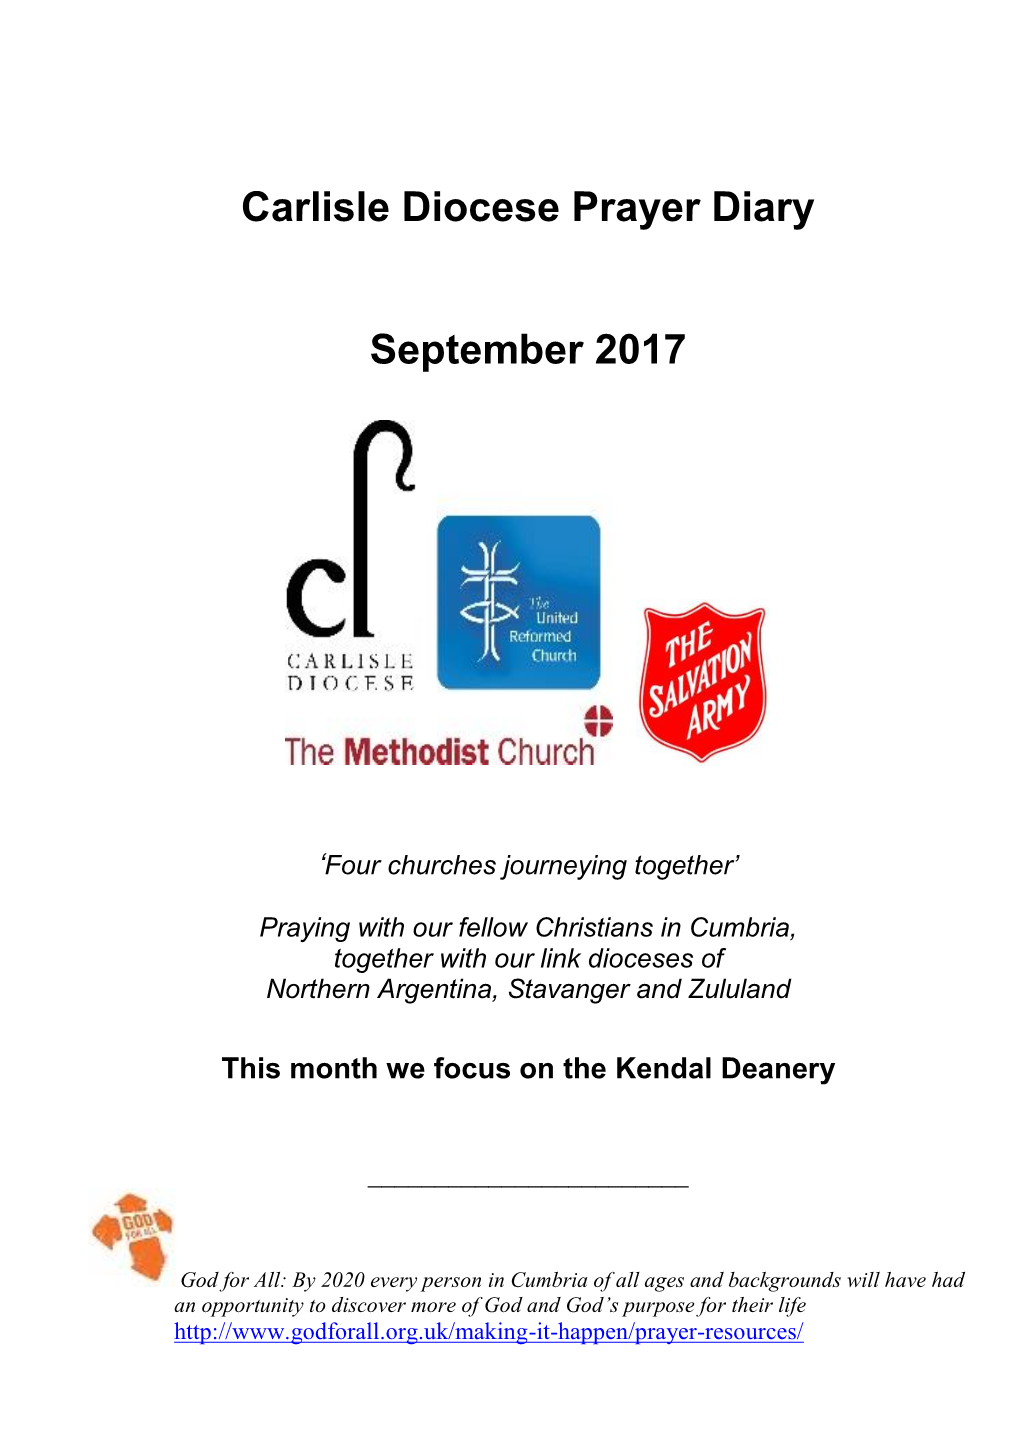 Carlisle Diocese Prayer Diary September 2017